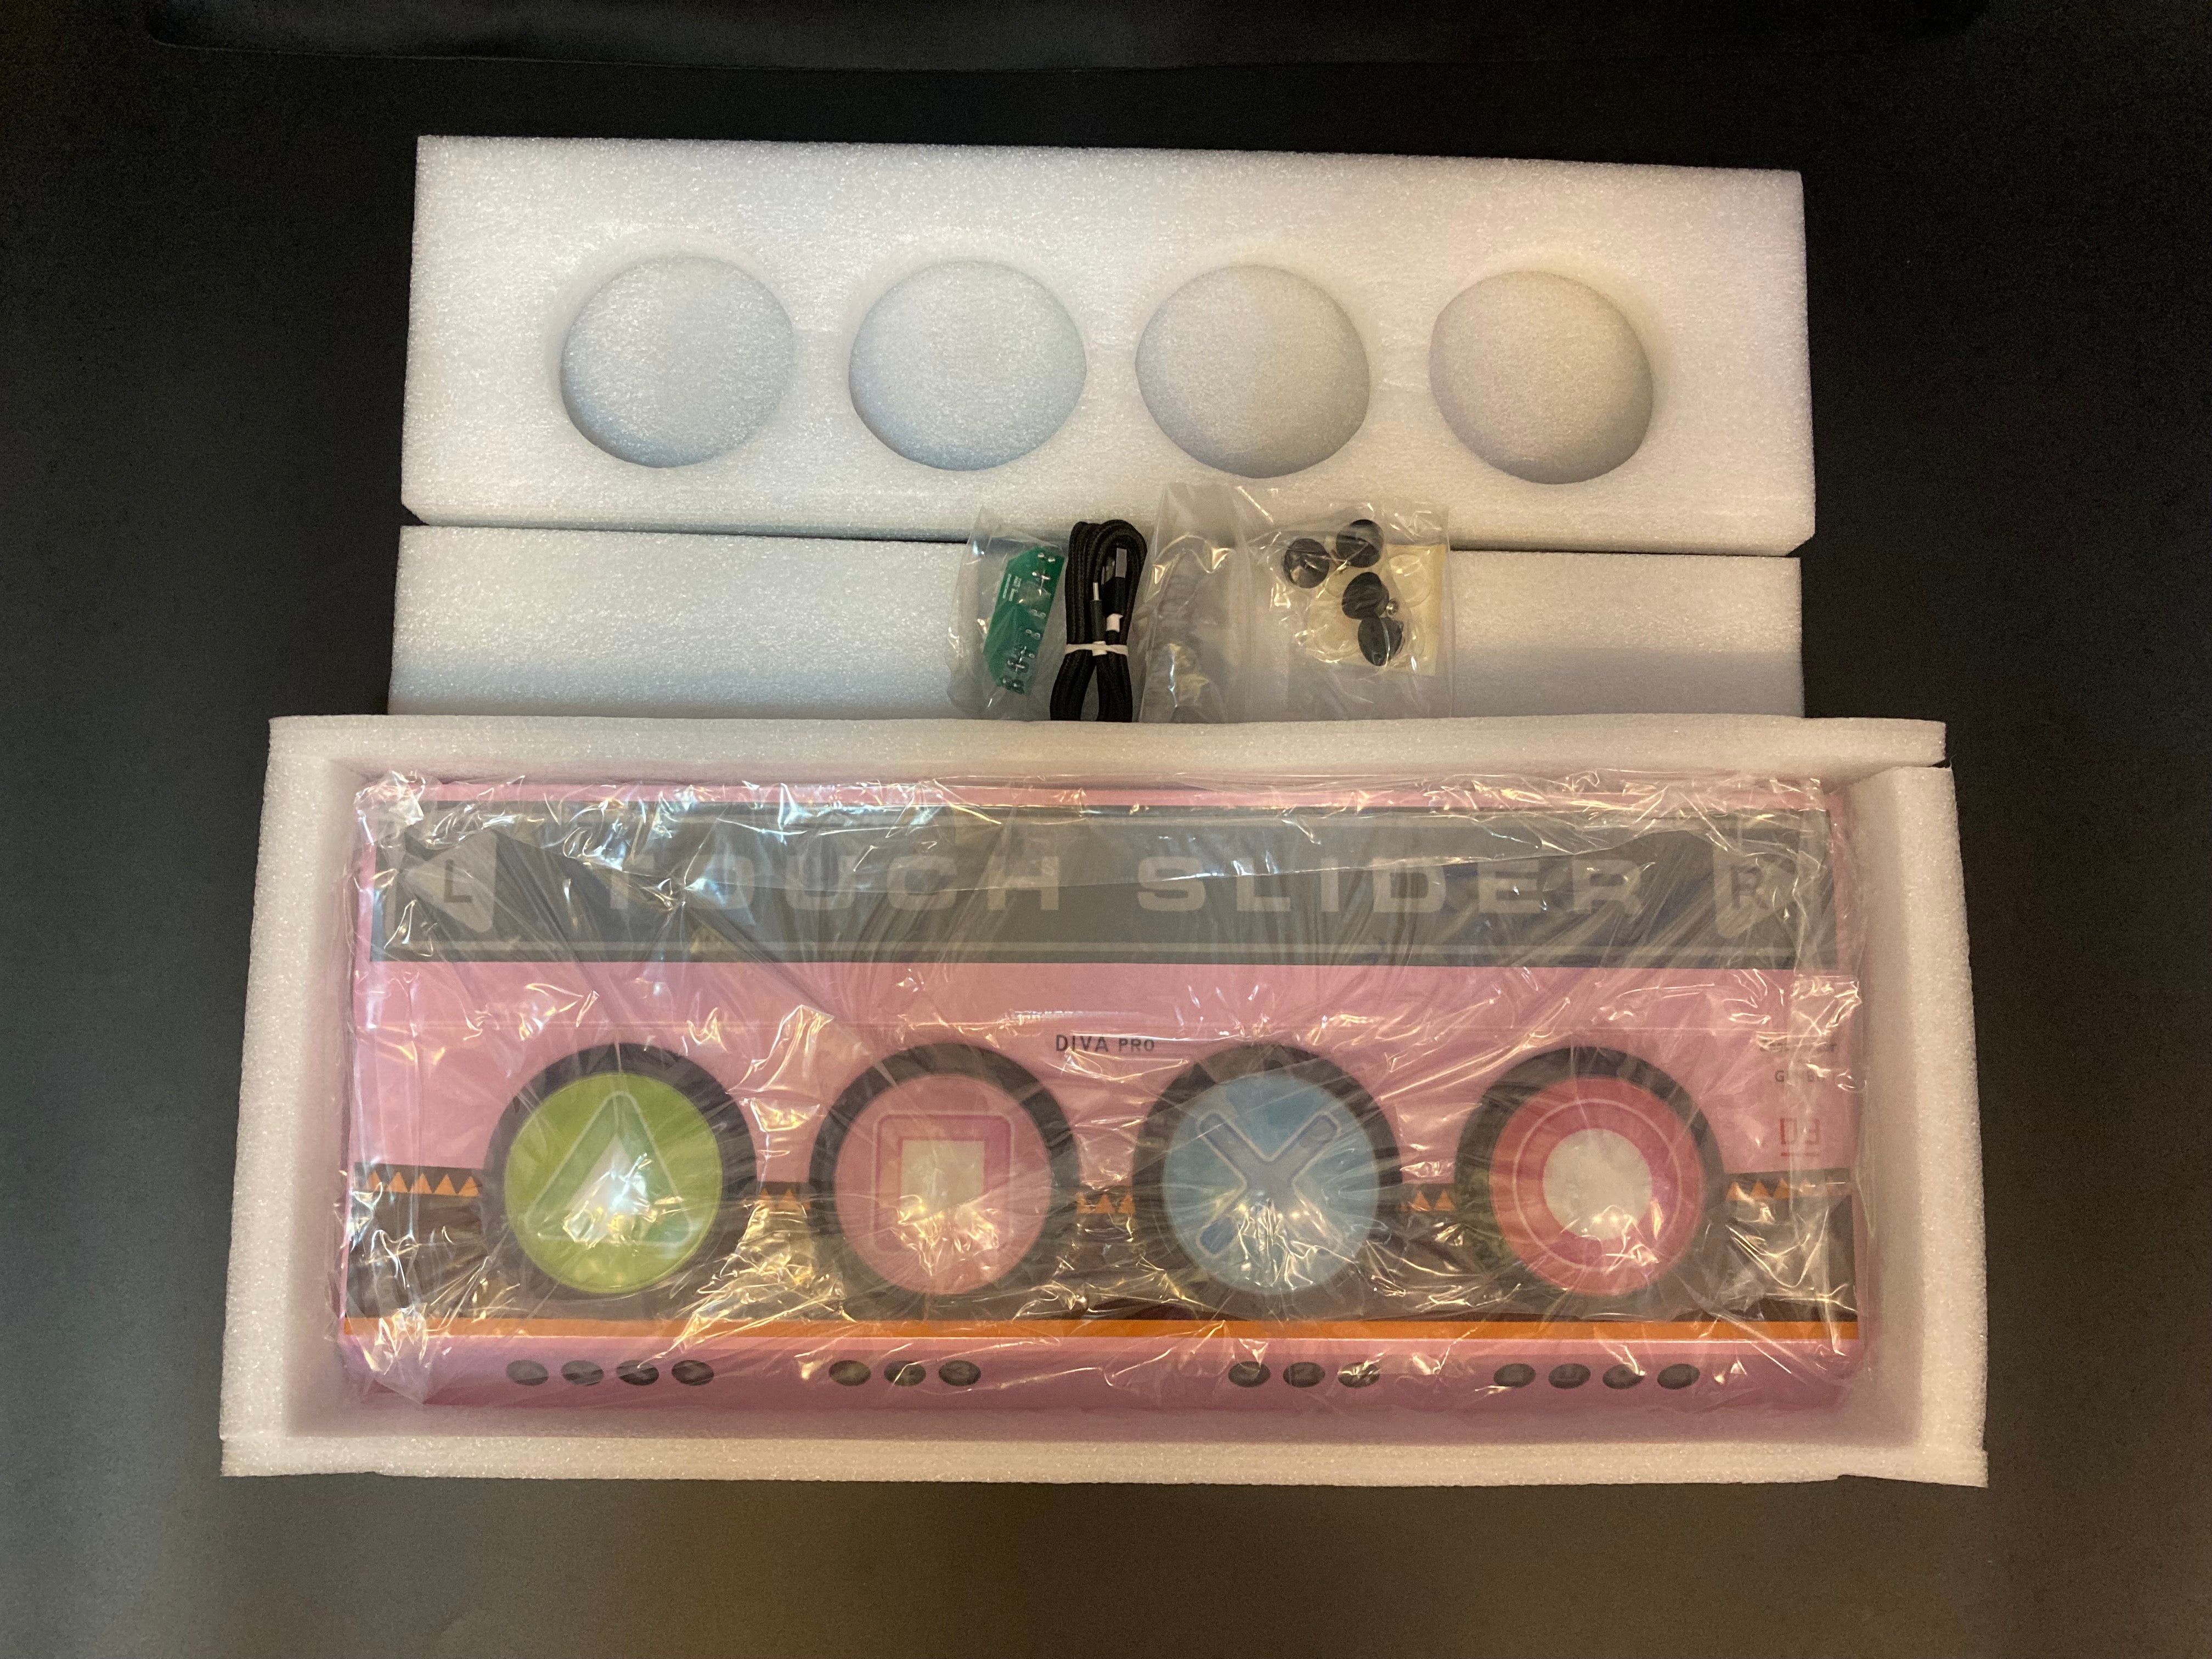 ZhouSensor DIVA Pro: Hatsune Miku Project Diva Arcade-Style Controller